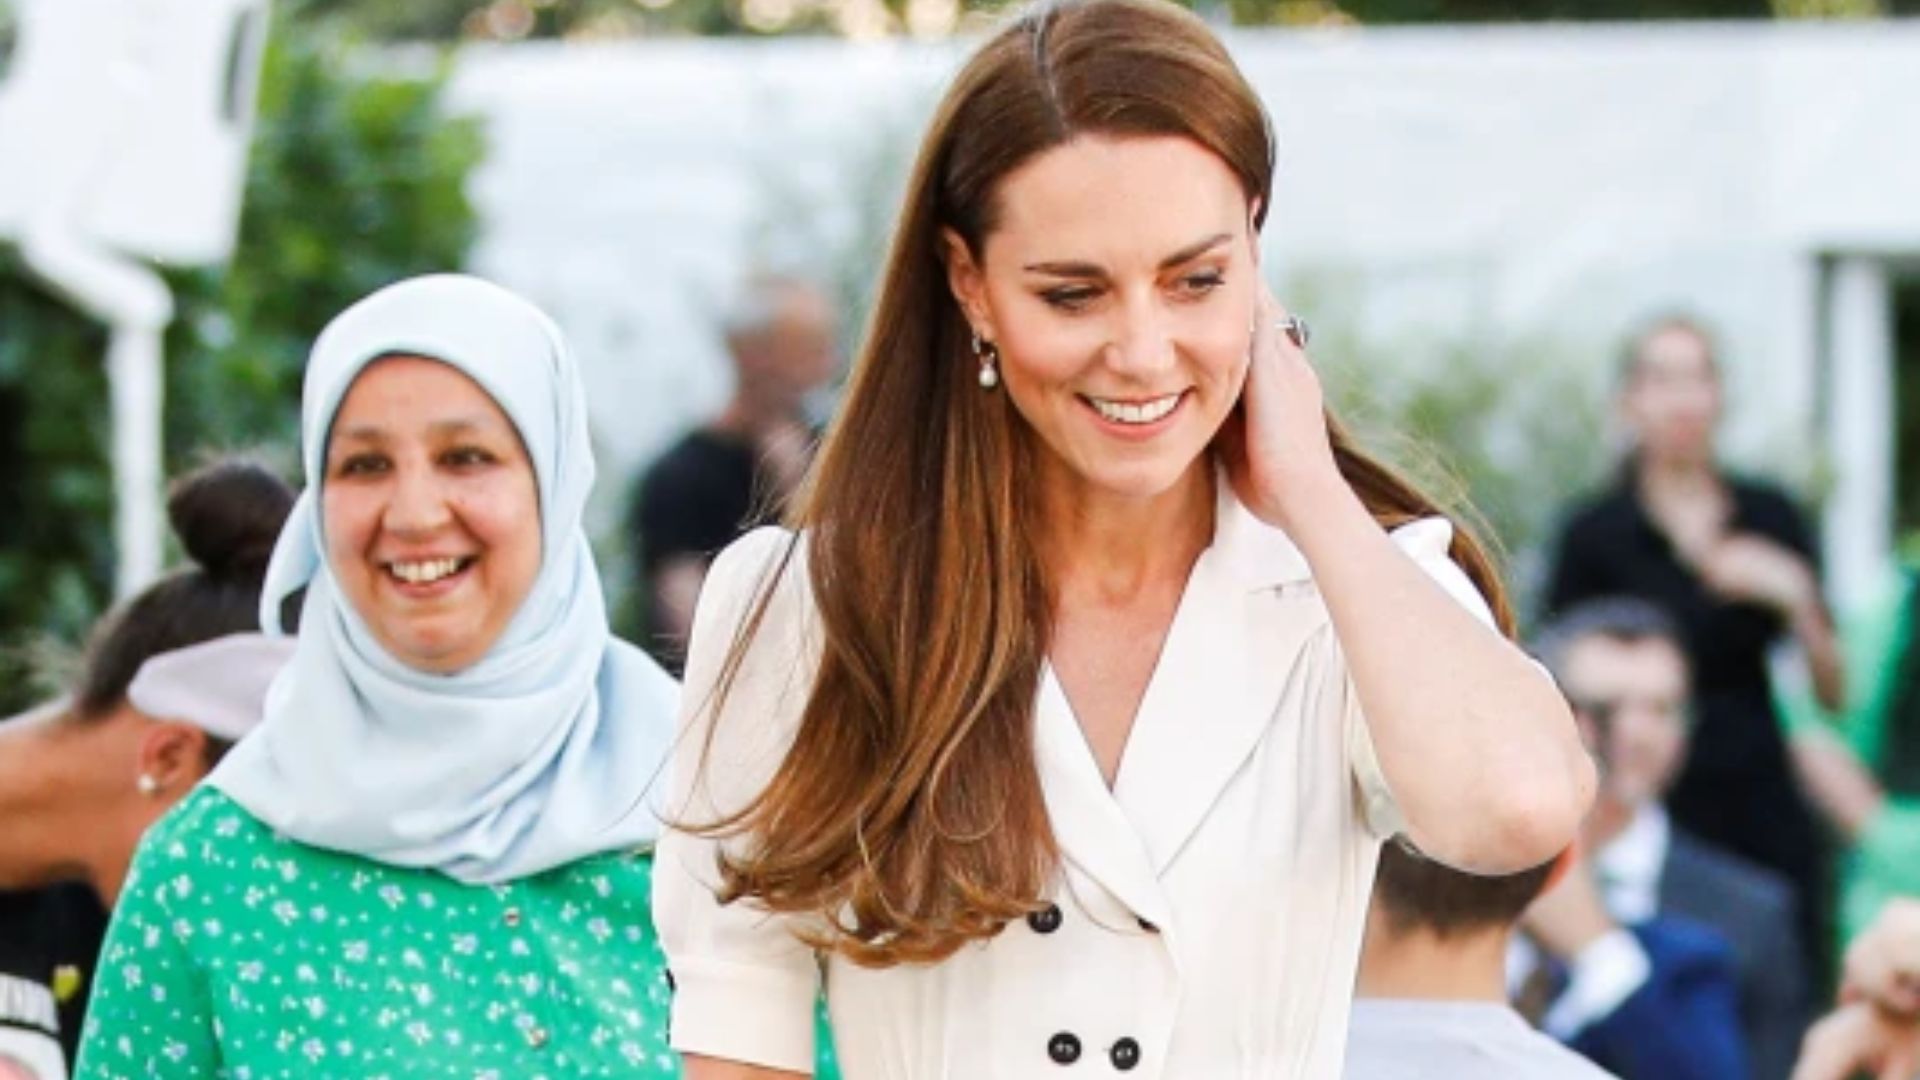 Kate Middleton conveys summer style in £2450 white silk dress